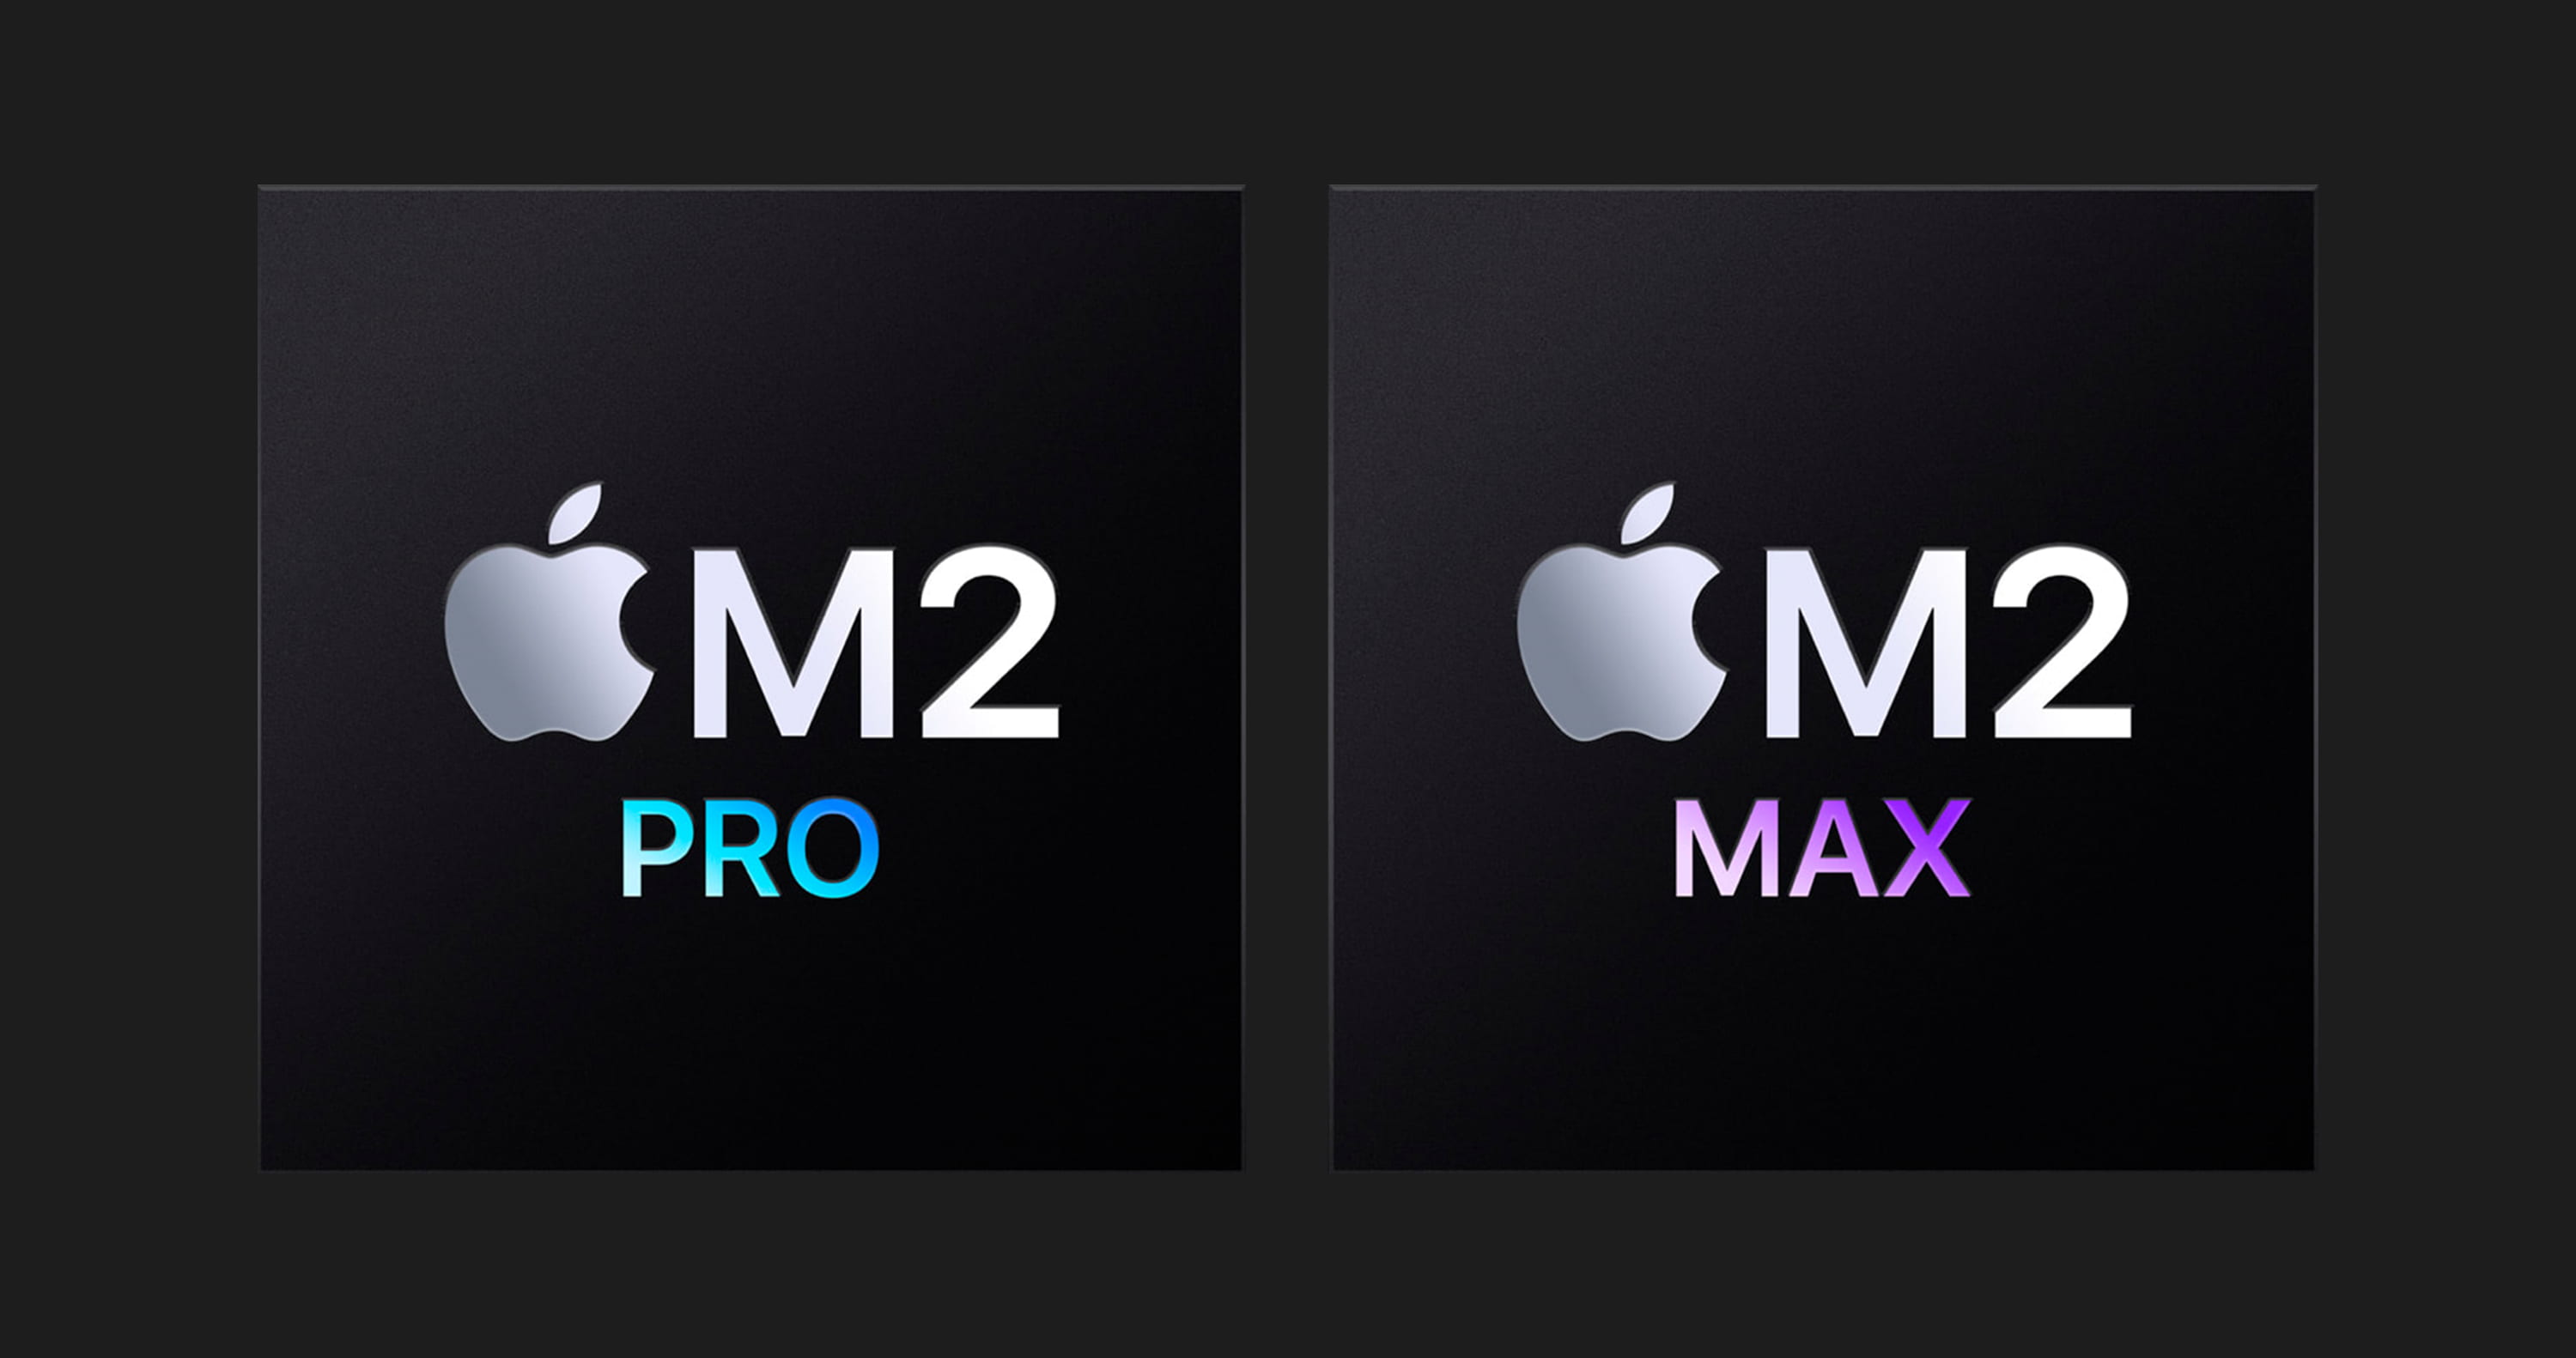 Apple MacBook Pro 16 with Apple M2 Max, 12 CPU / 38 GPU, 96GB RAM, 1TB SSD (Space Gray) (Z17400184)